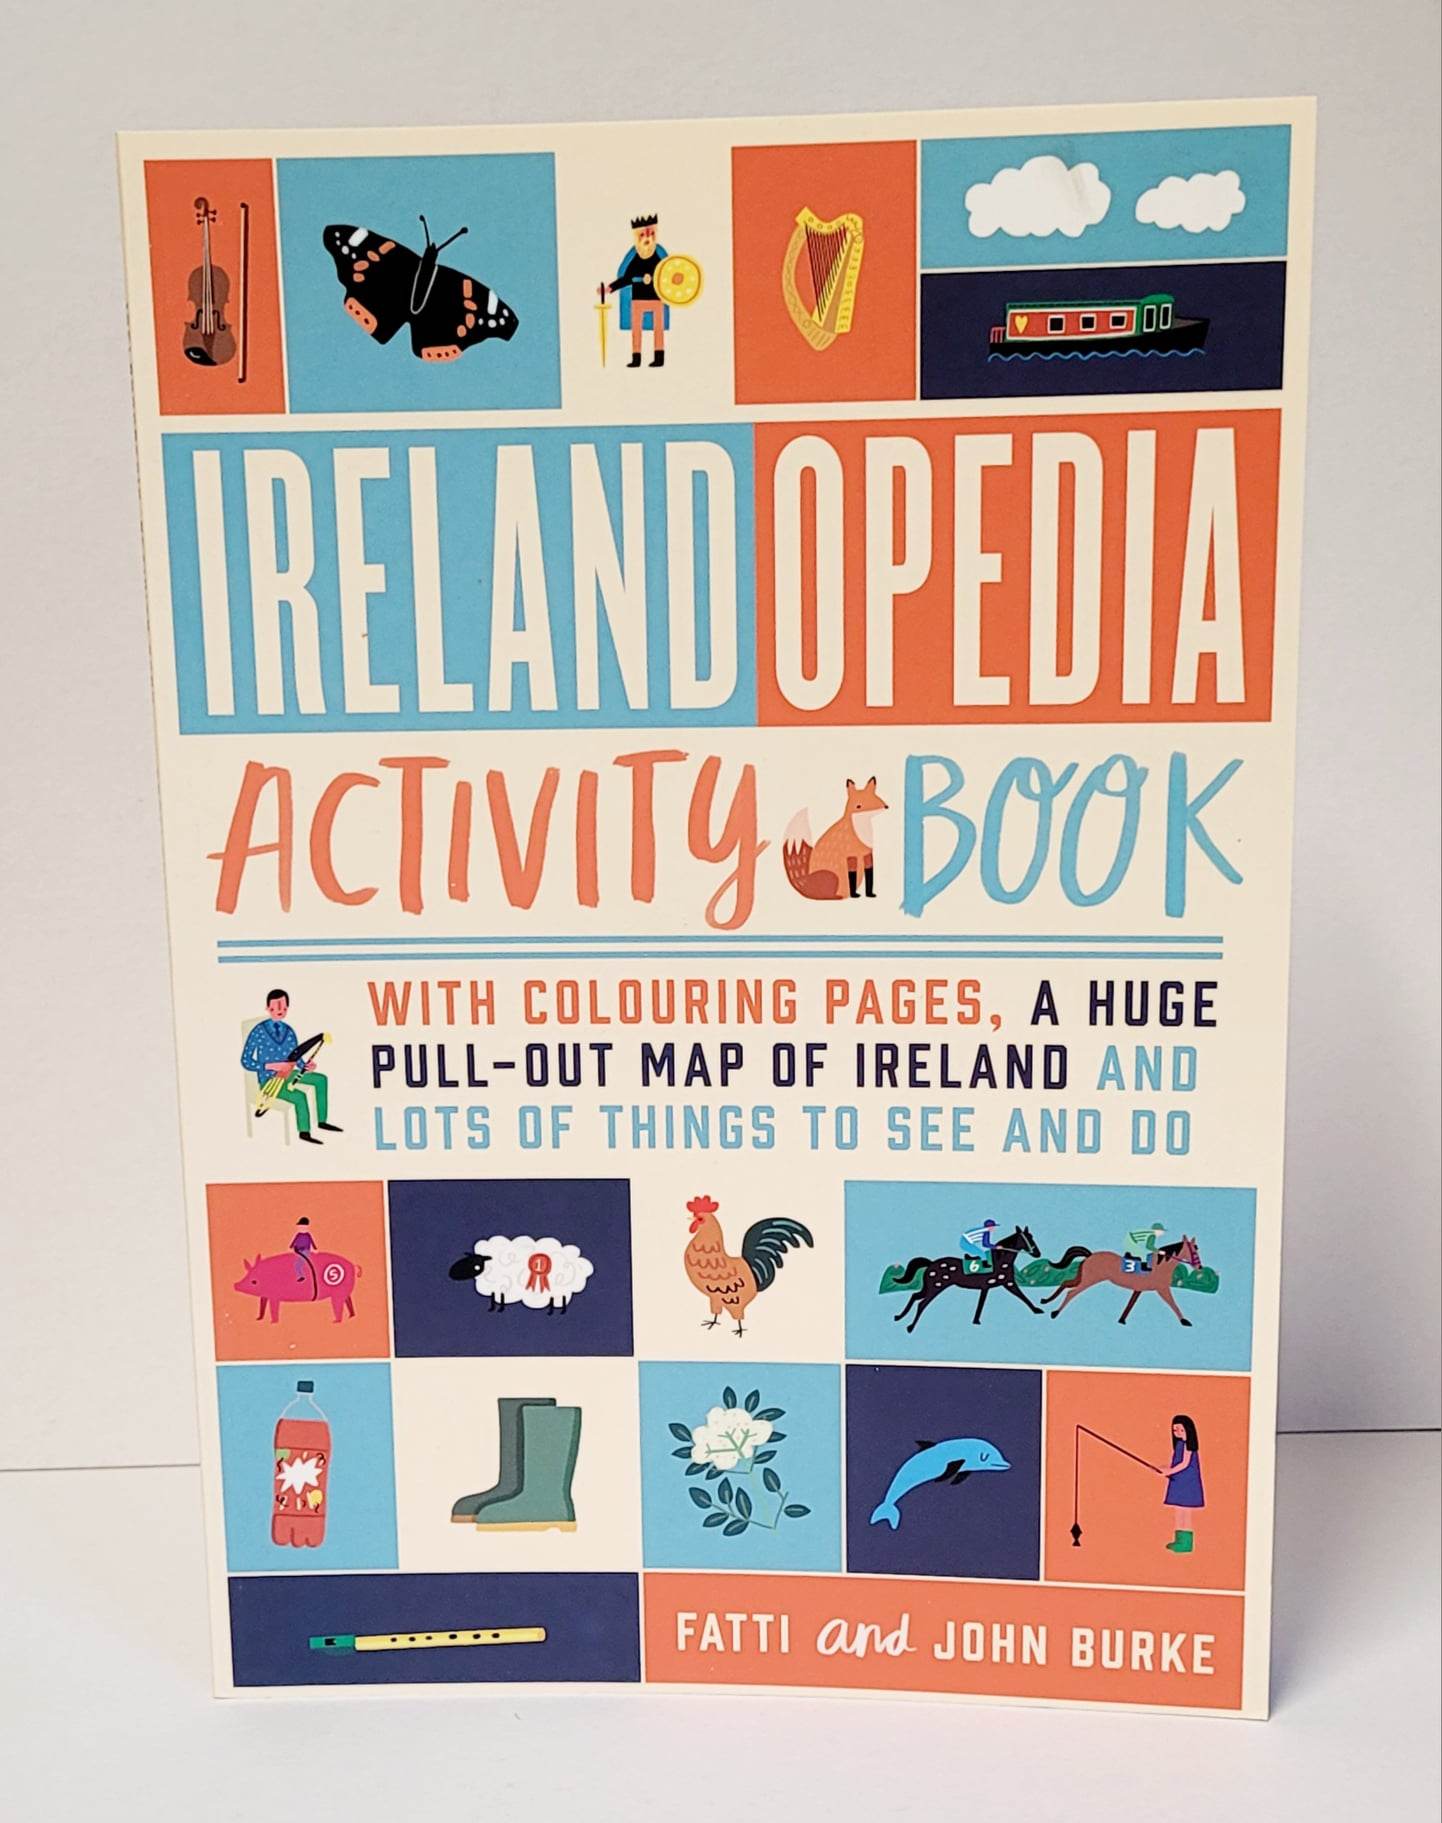 Irelandopedia Activity Book by Fatti and John Burke